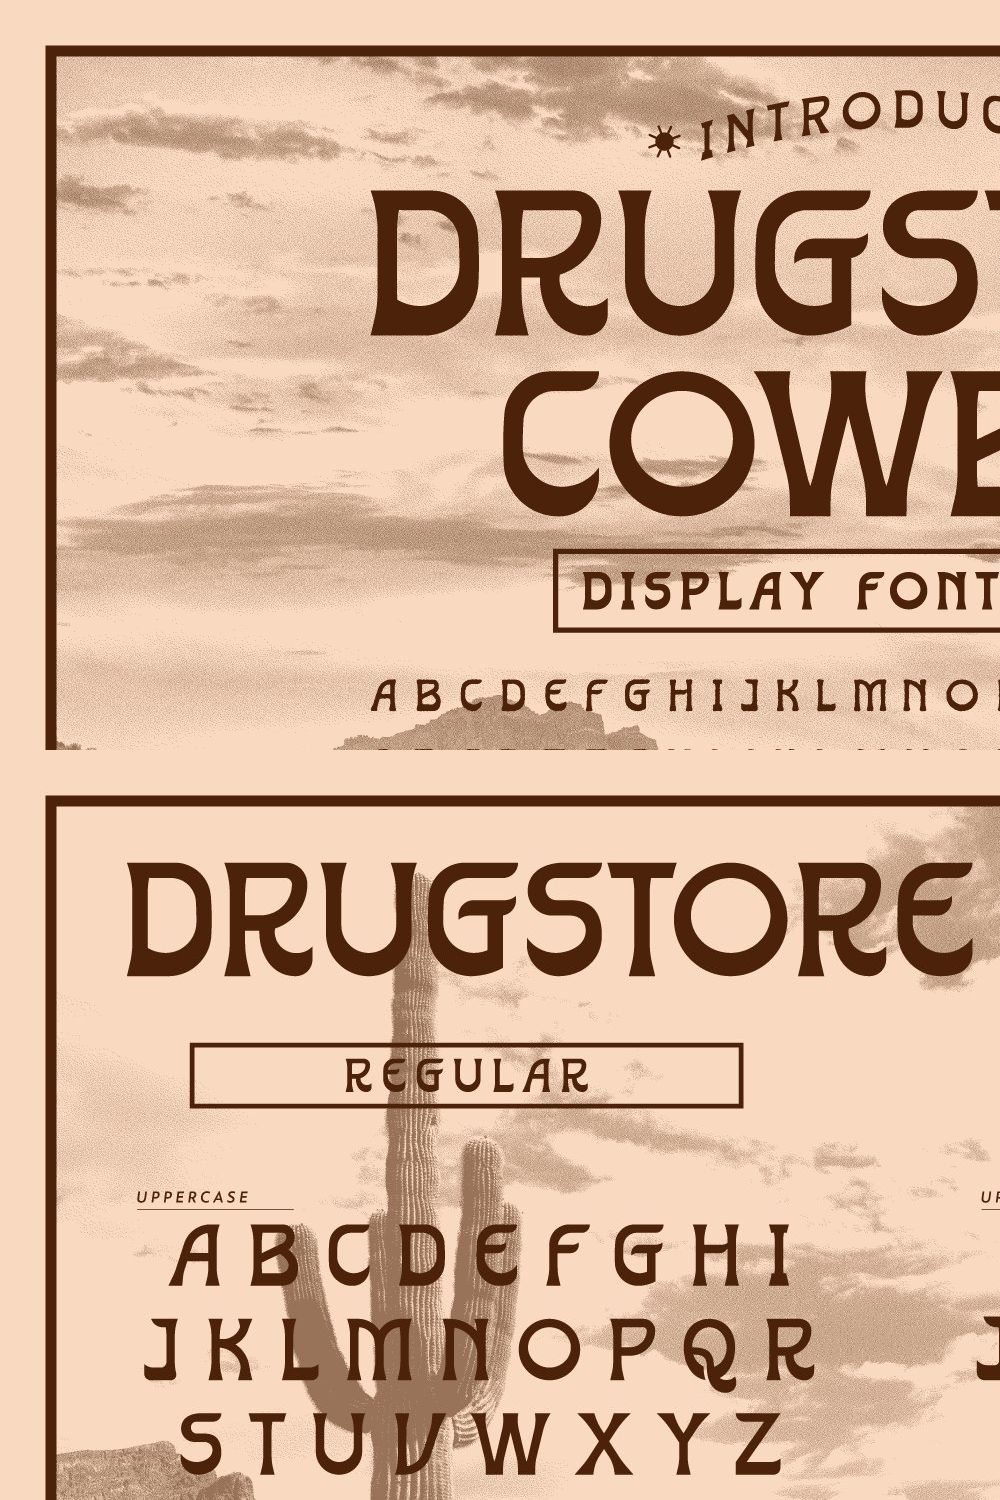 Drugstore Cowboy Font Family pinterest preview image.